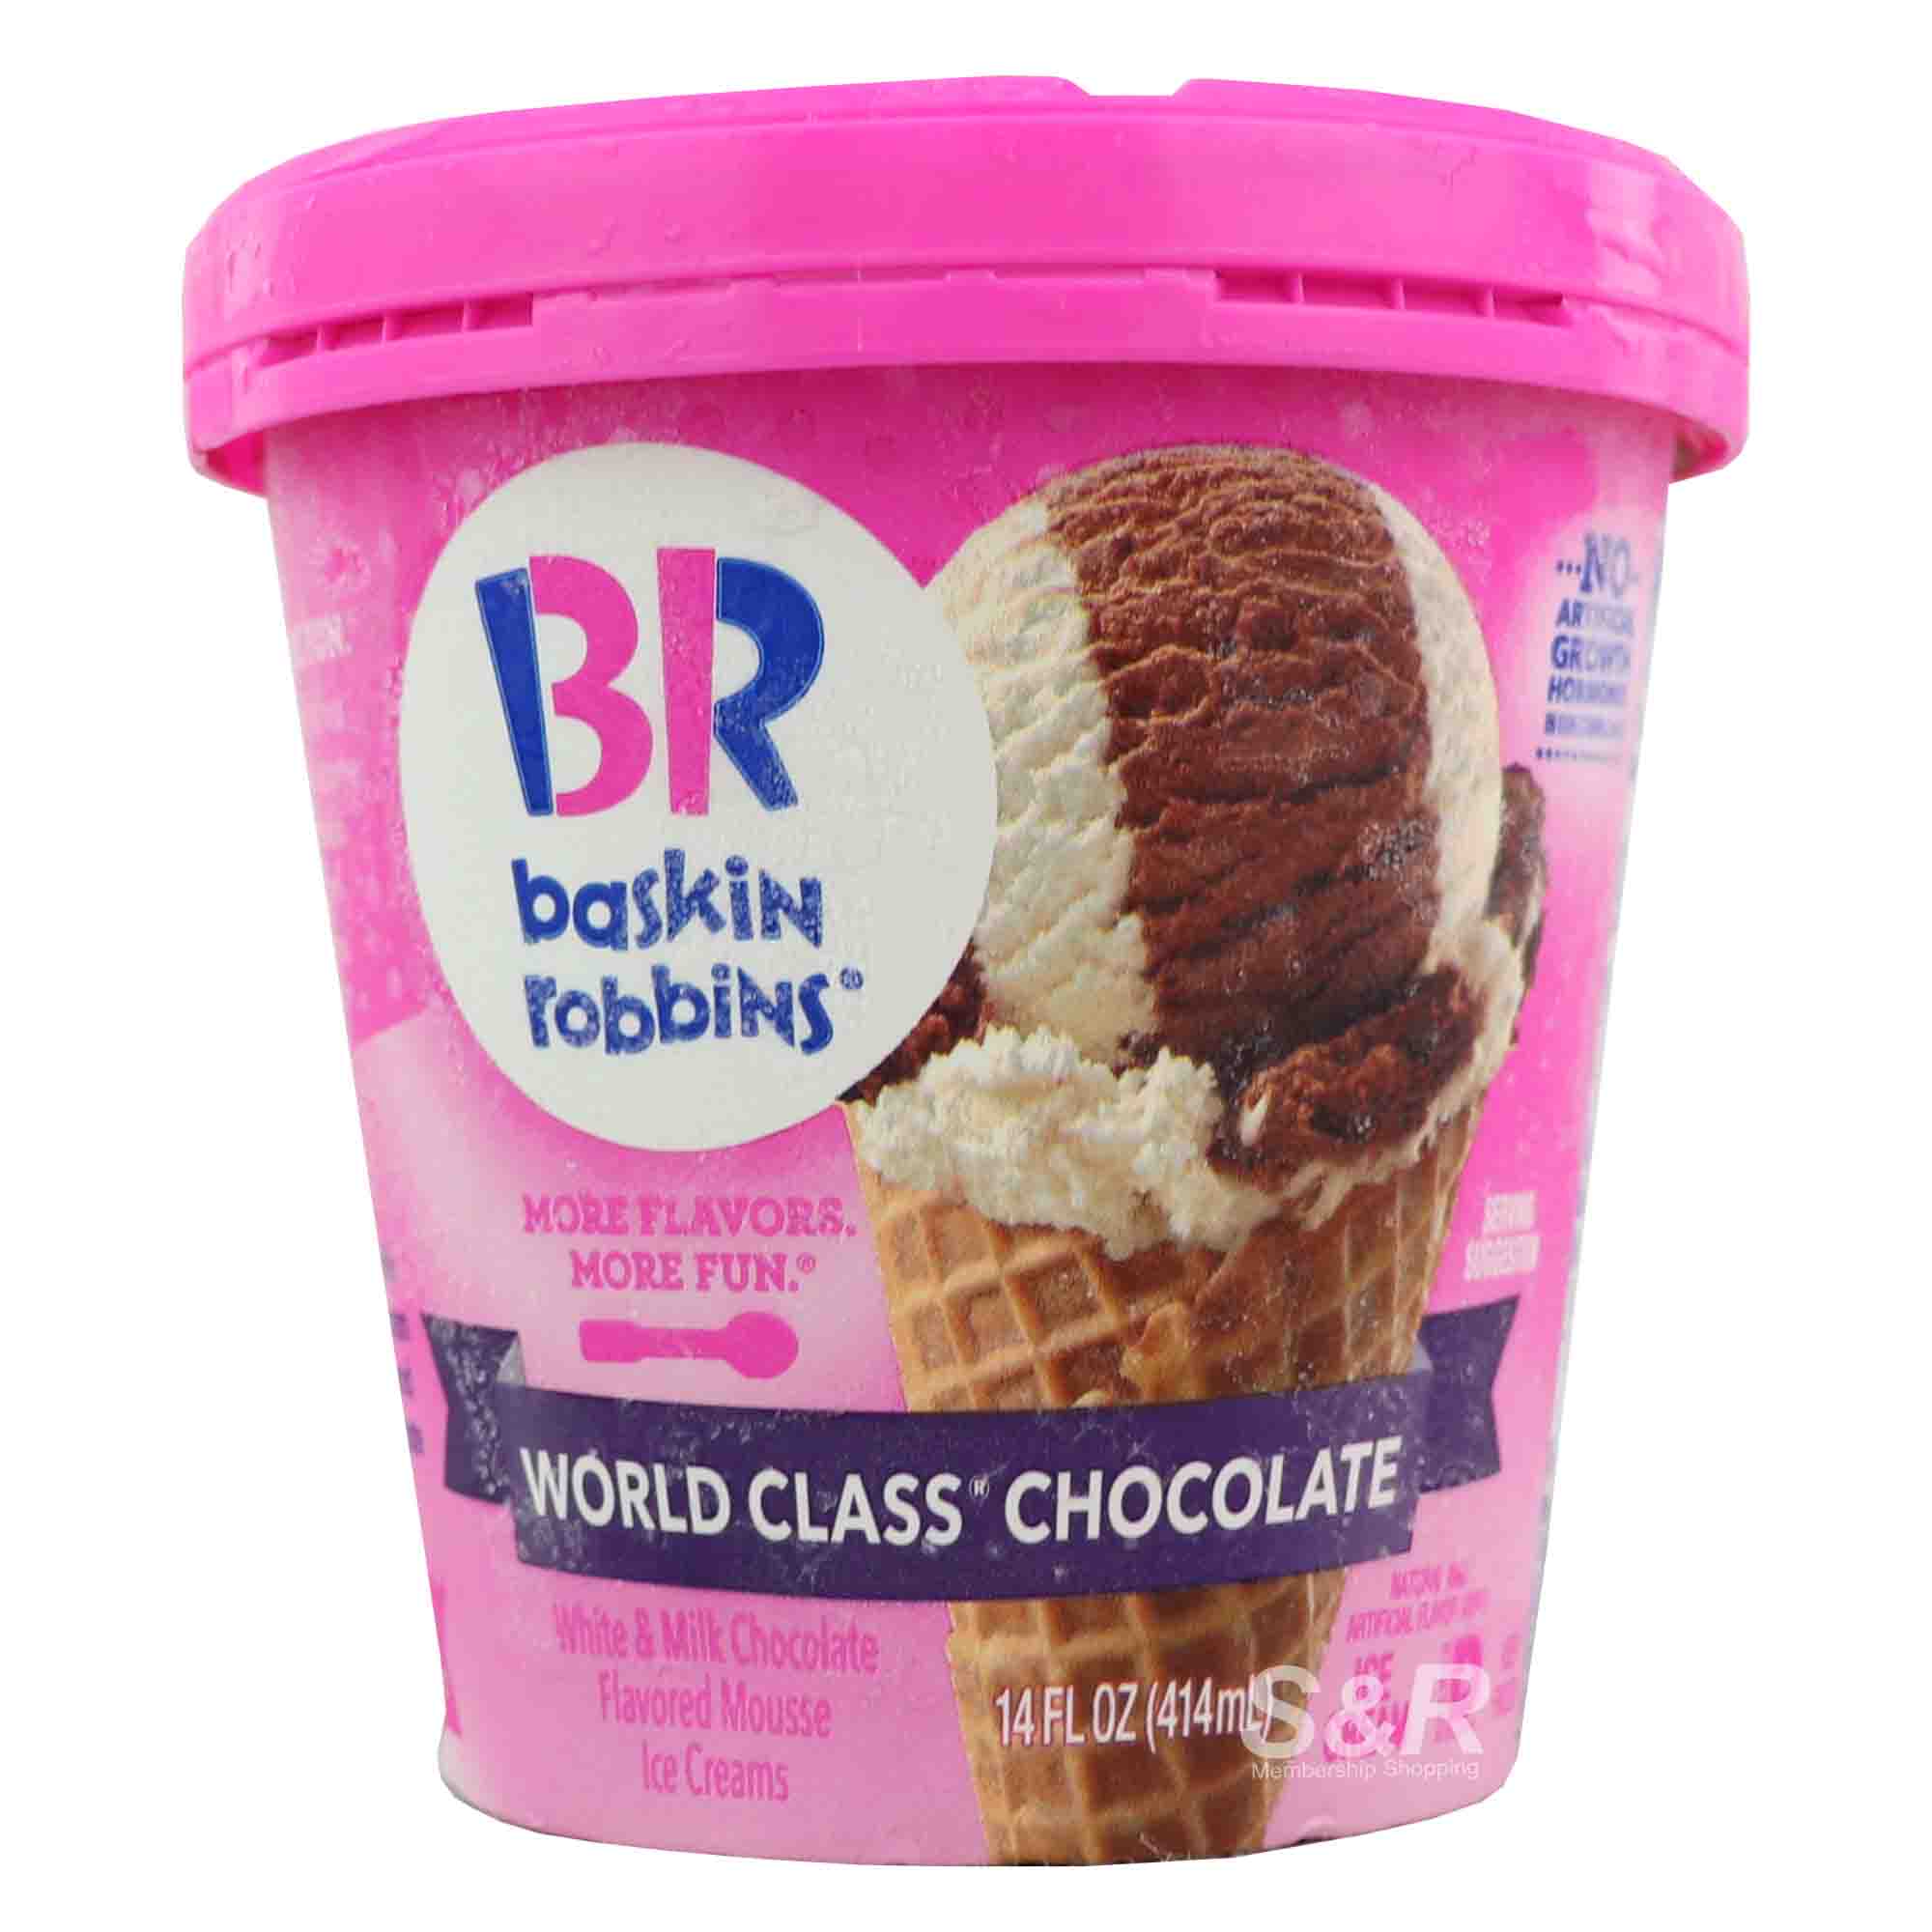 Baskin Robbins World Class Chocolate Ice Cream 414mL